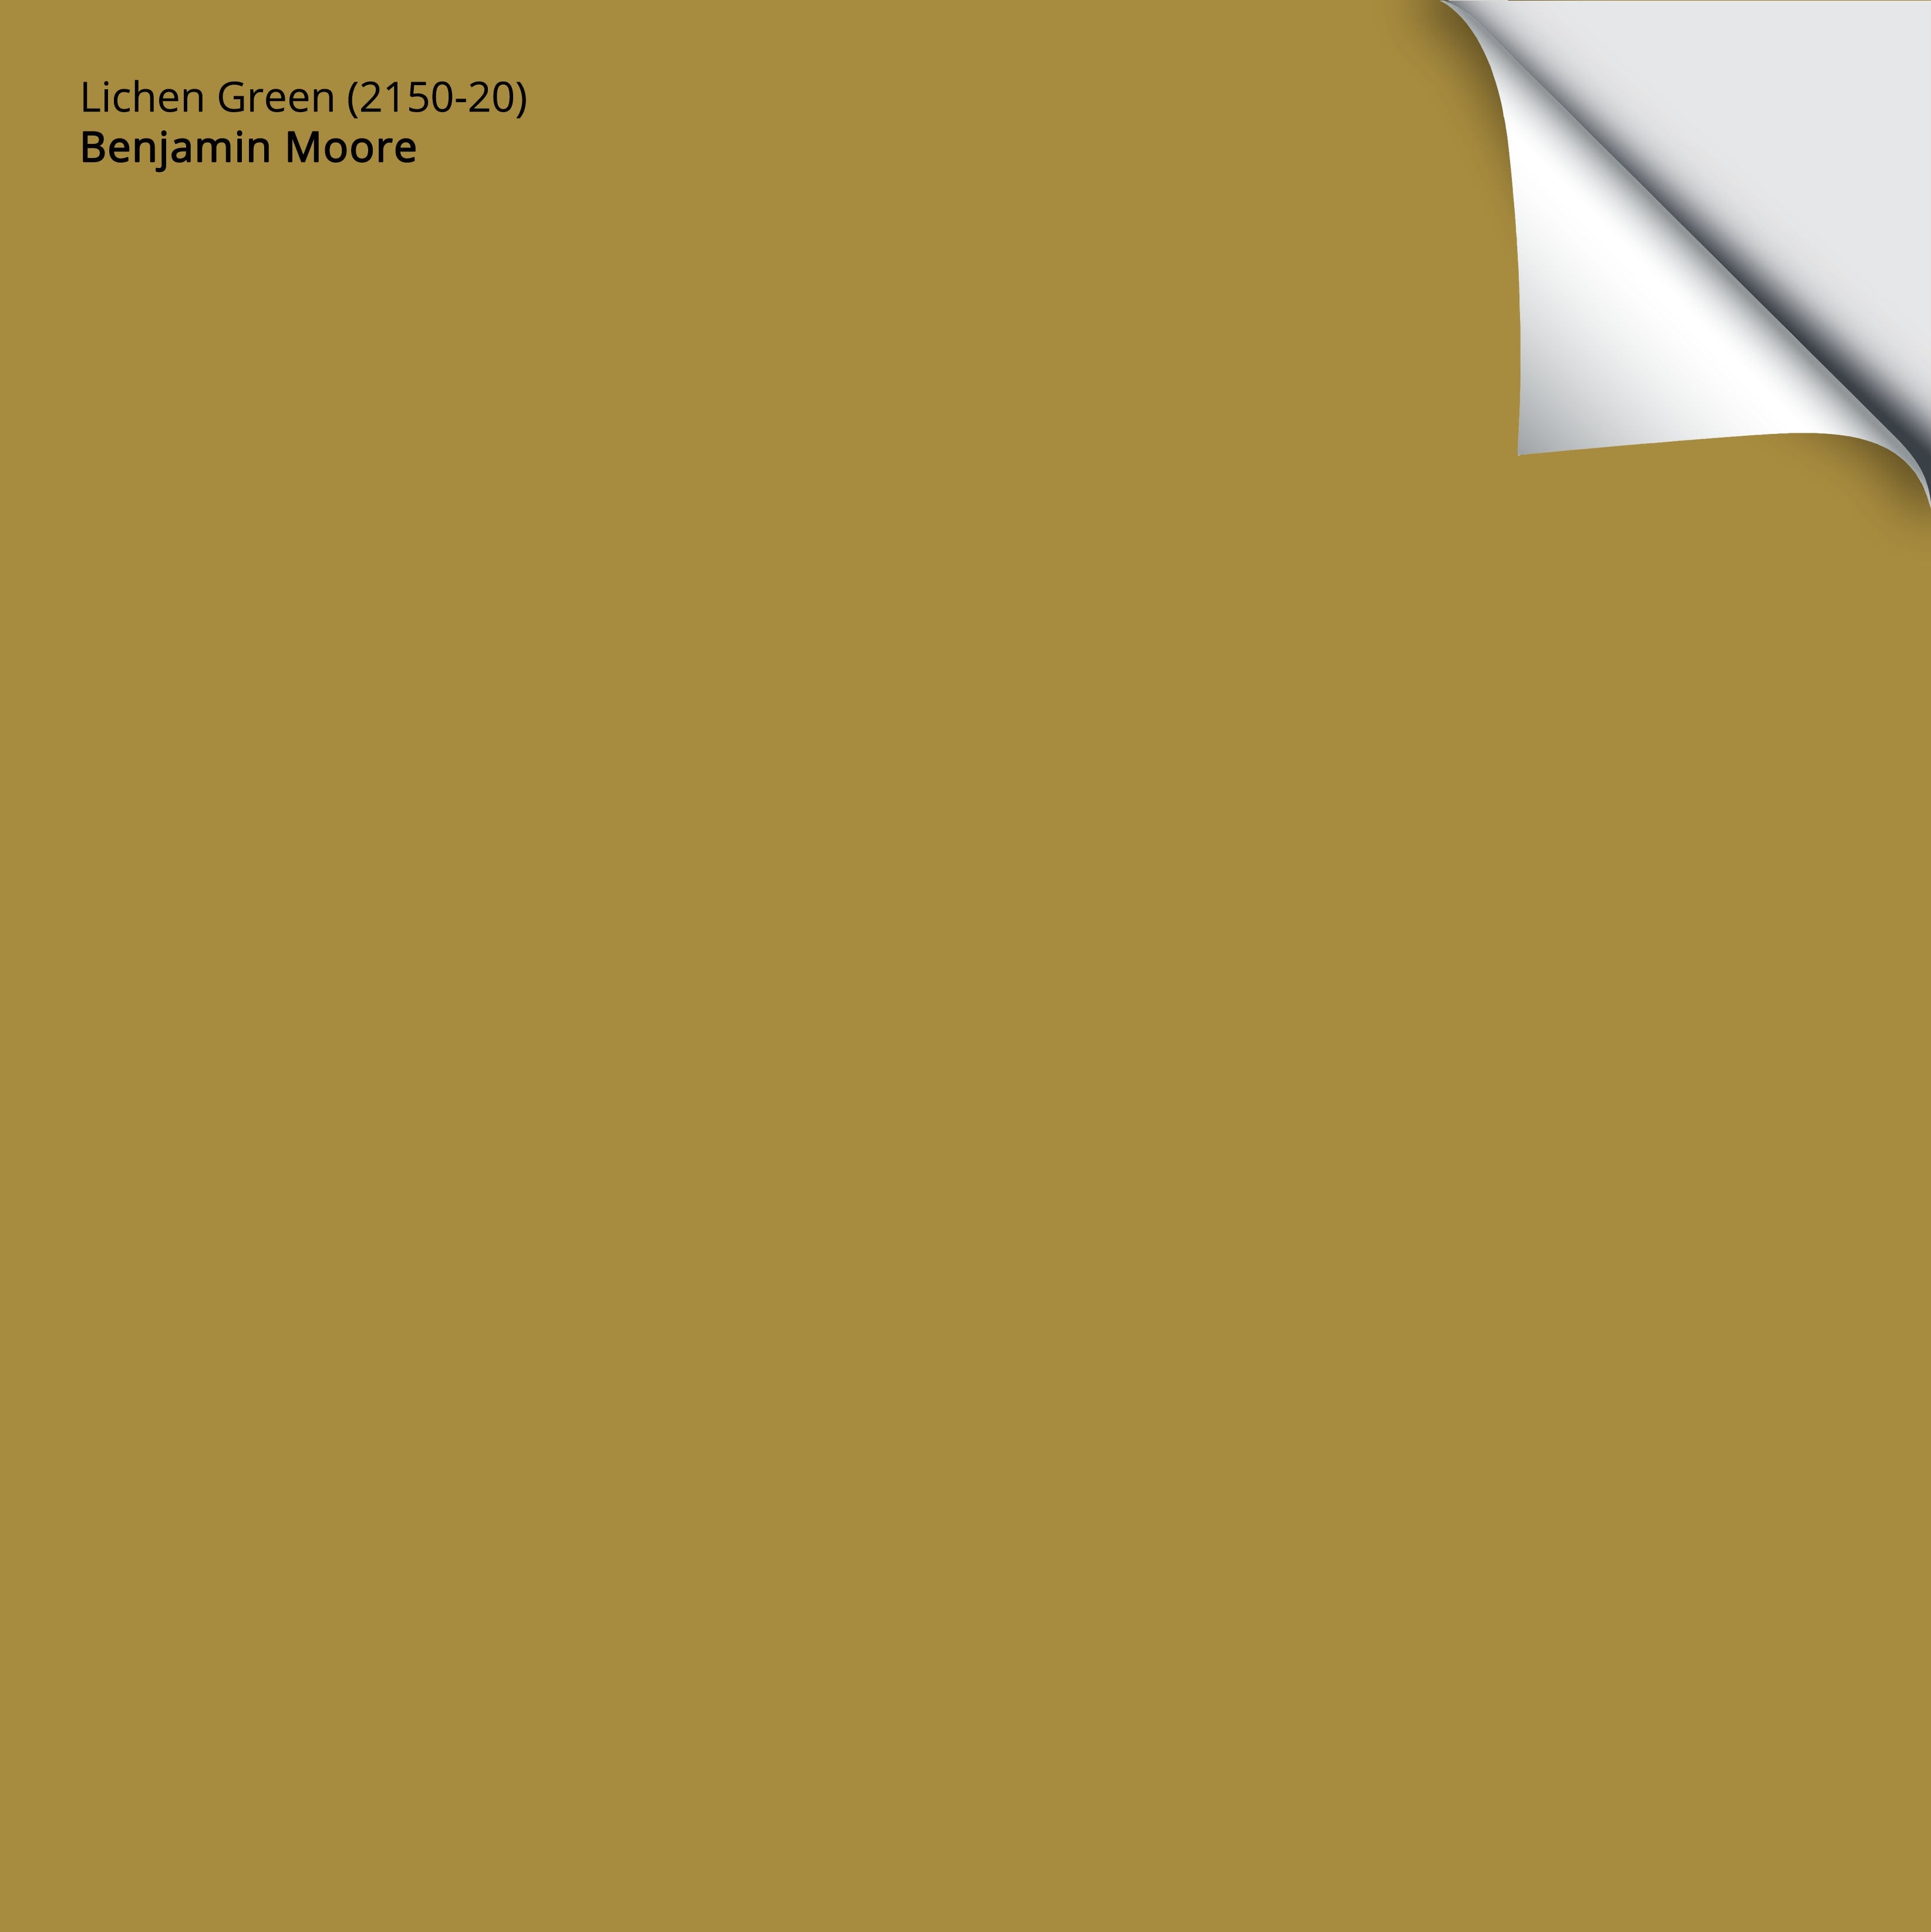 Lichen Green (2150-20): 9x14.75 – Benjamin Moore x Samplize